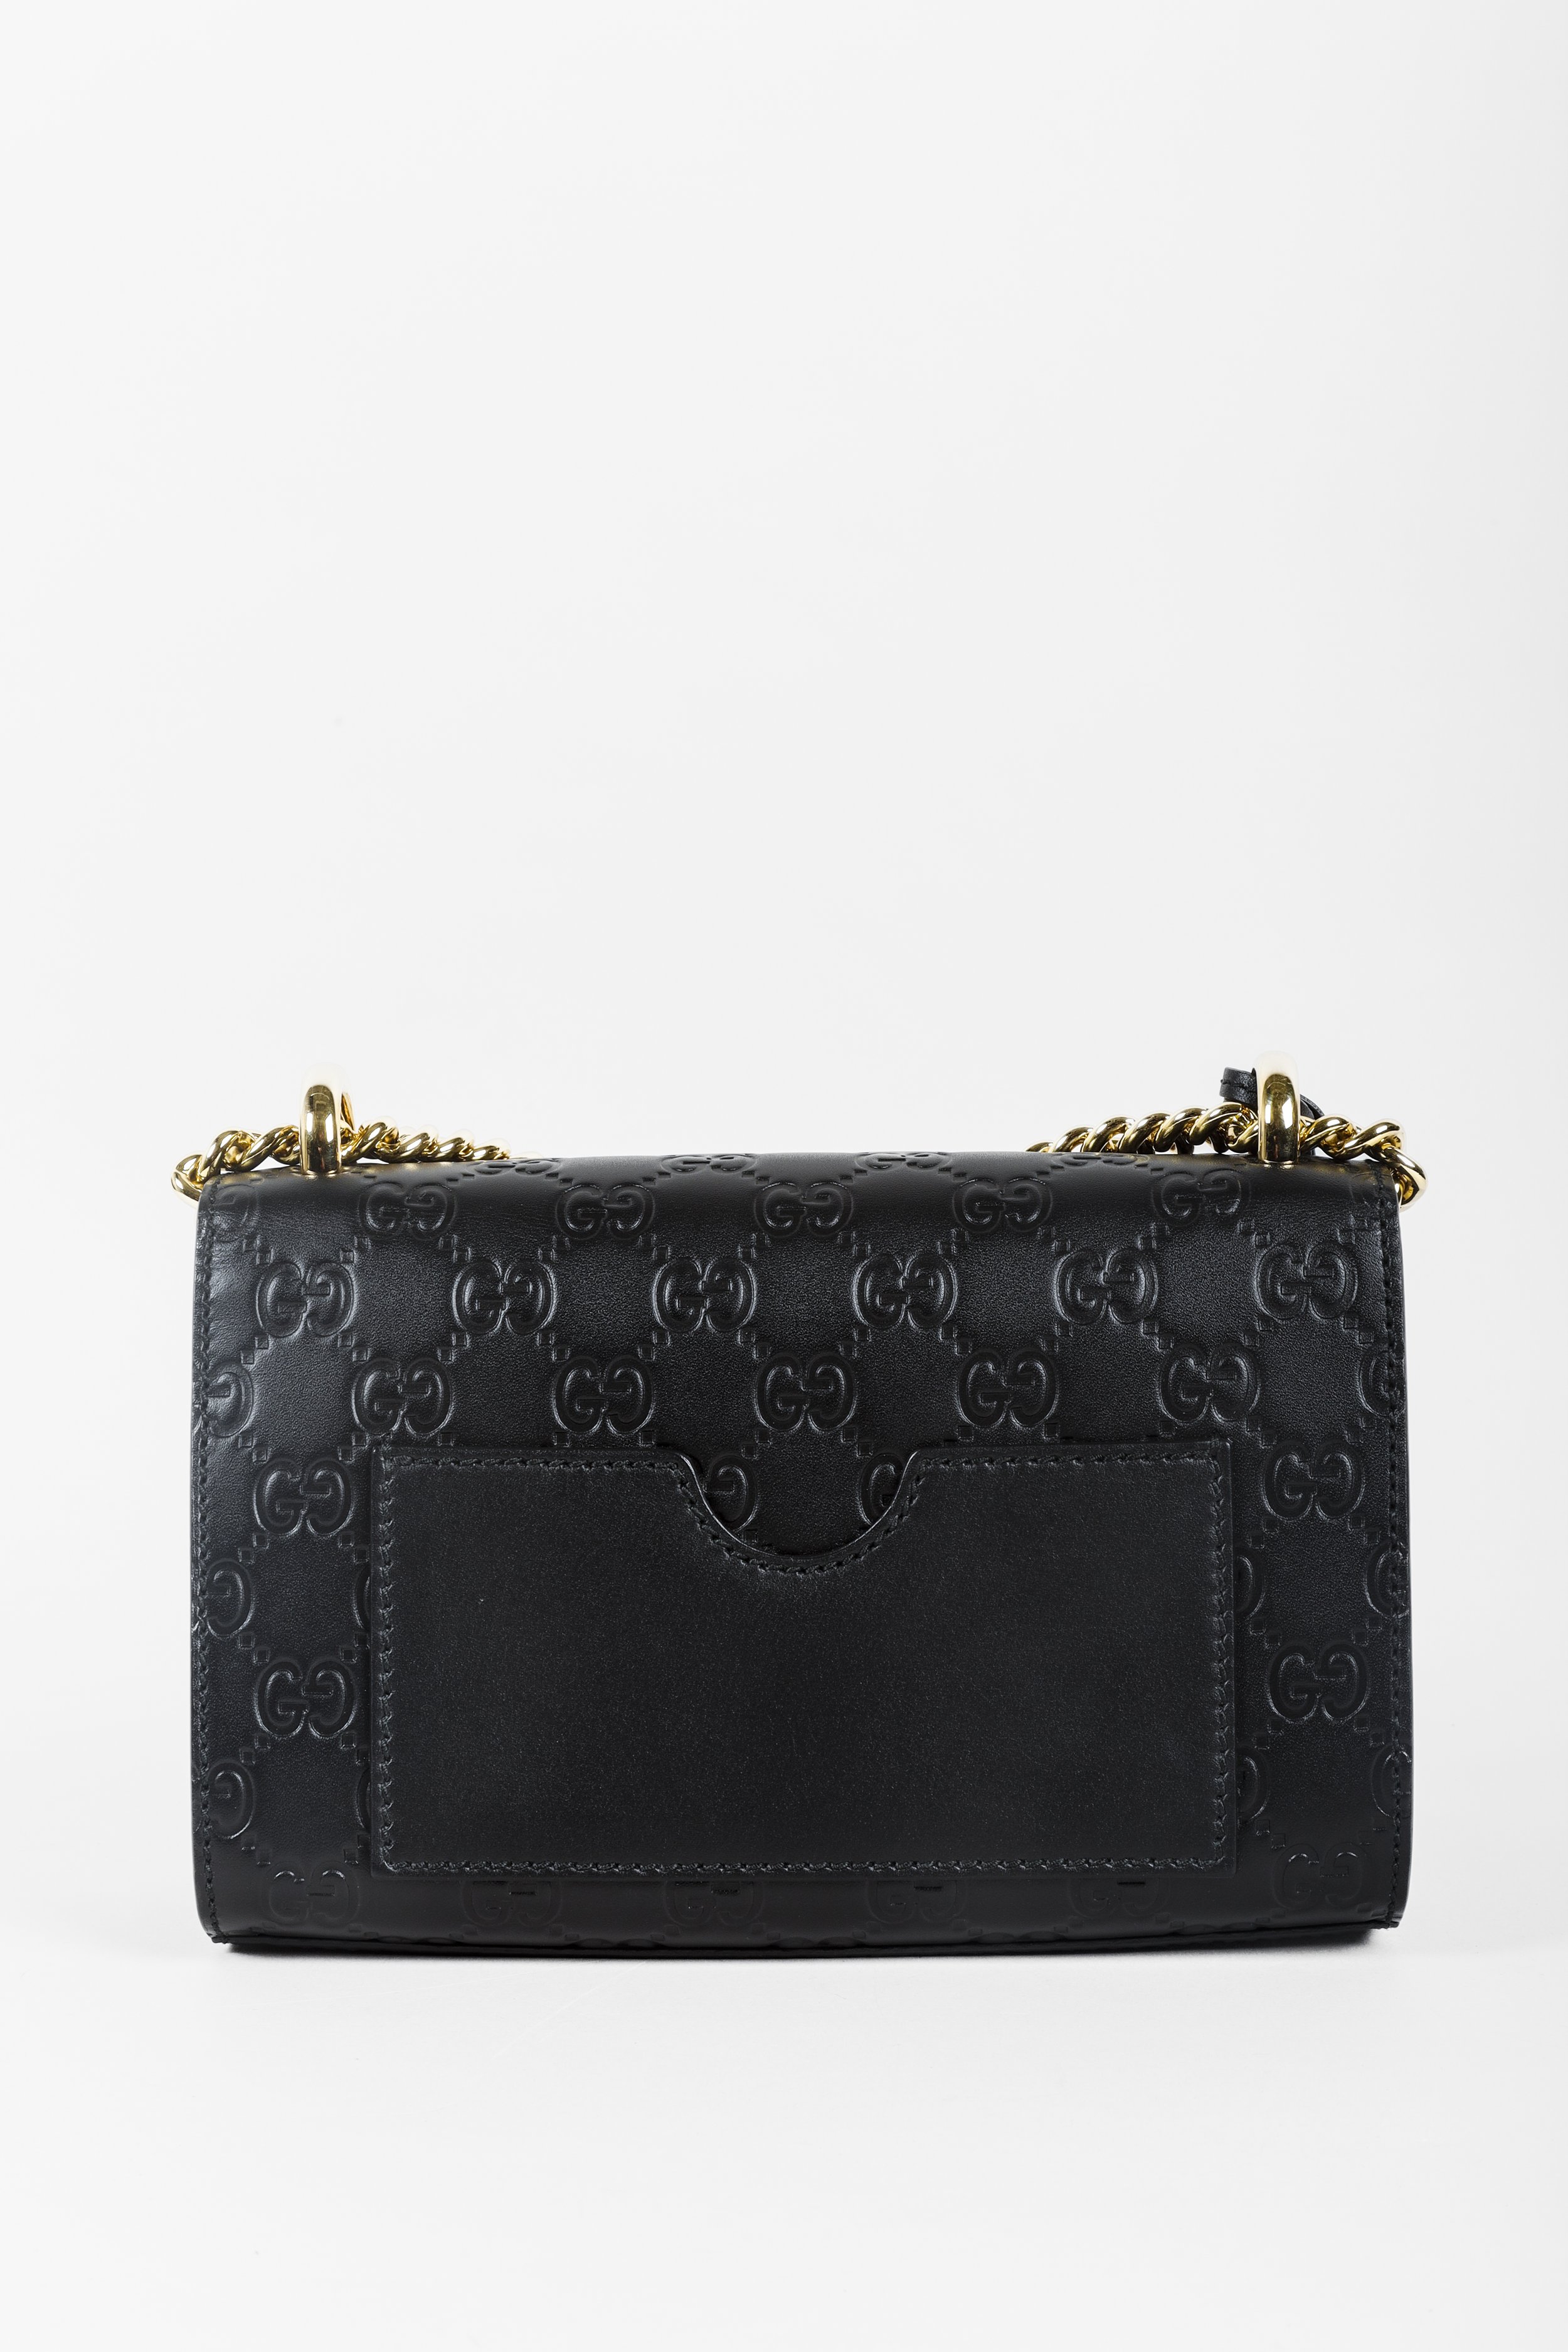 Gucci Diana Mini leather tote bag in black - Gucci | Mytheresa